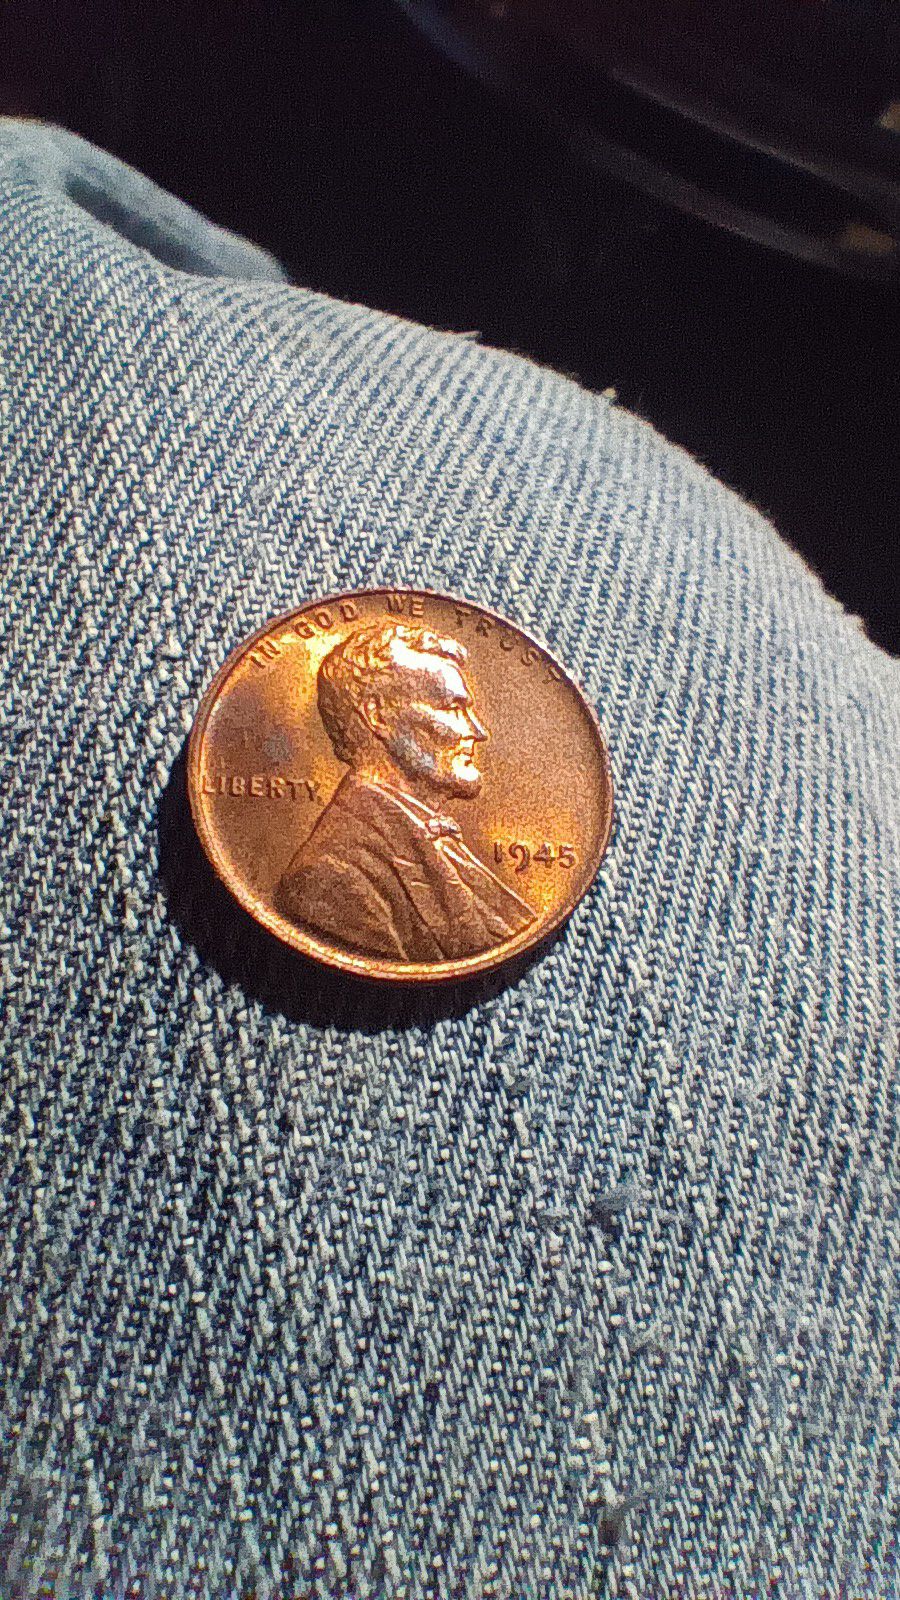 1945 Wheat Cent 